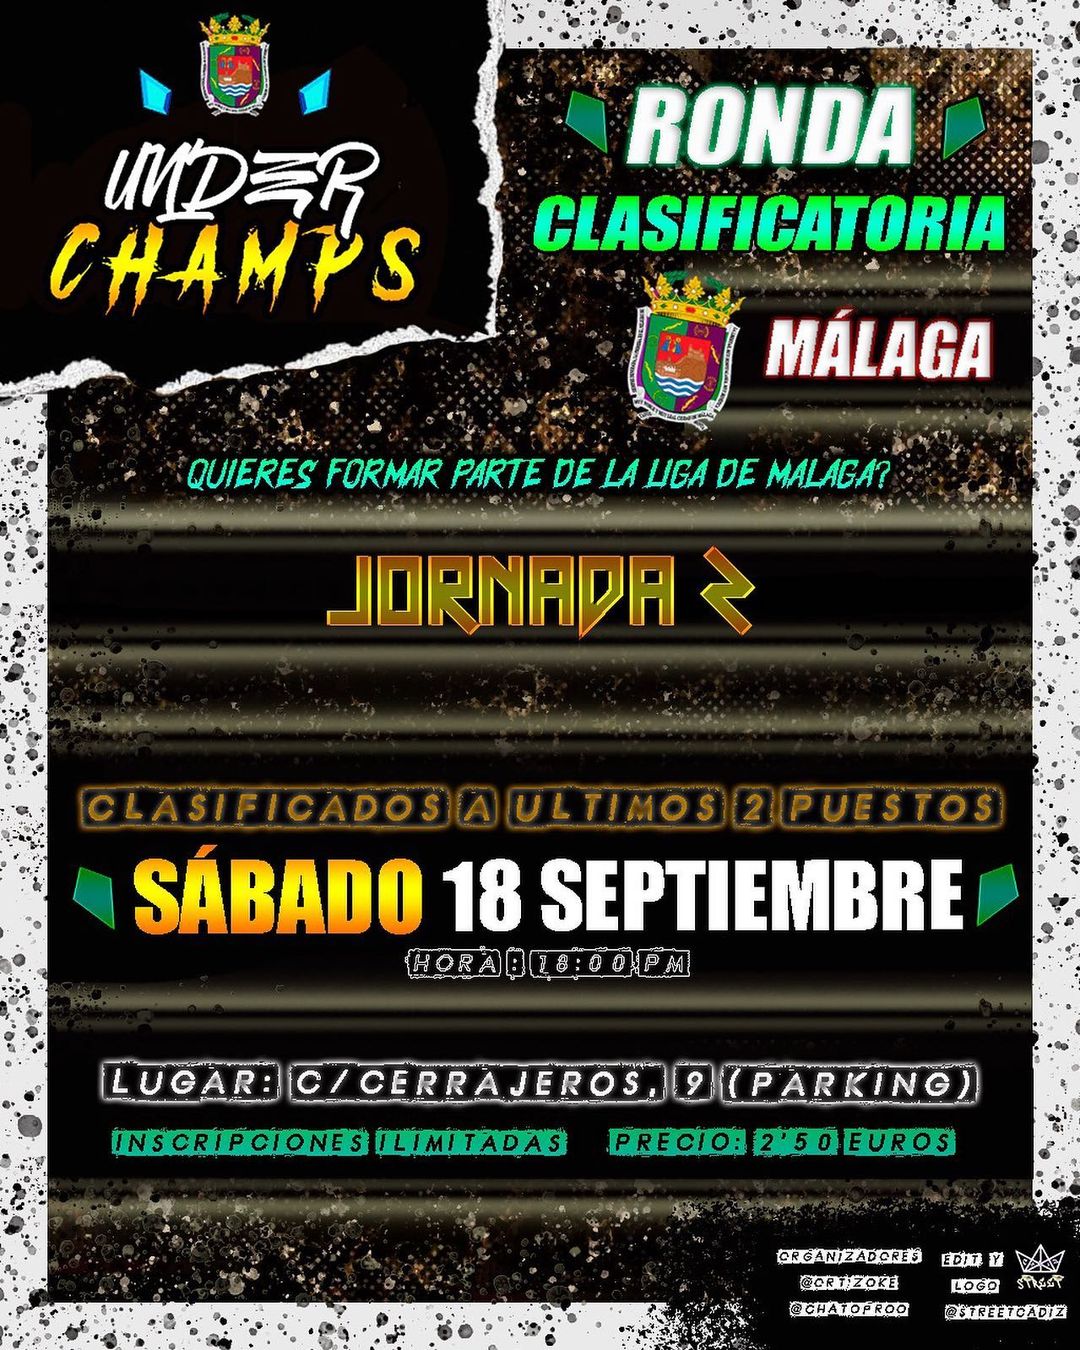 cartel Ronda Clasificatoria Jornada 2 Málaga underchamps